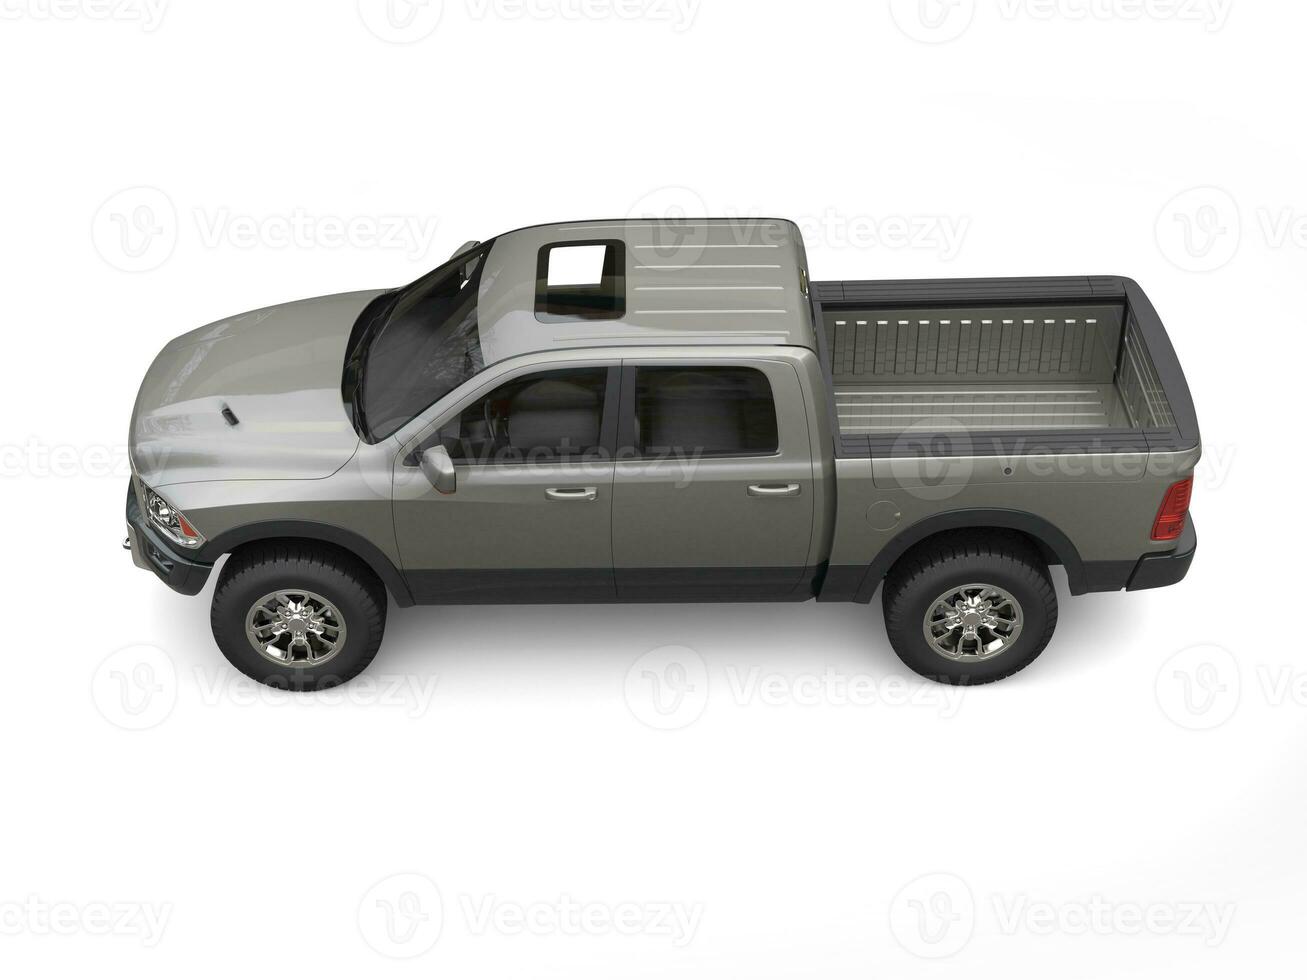 Pick-up truck - dark gray metallic - top down view photo